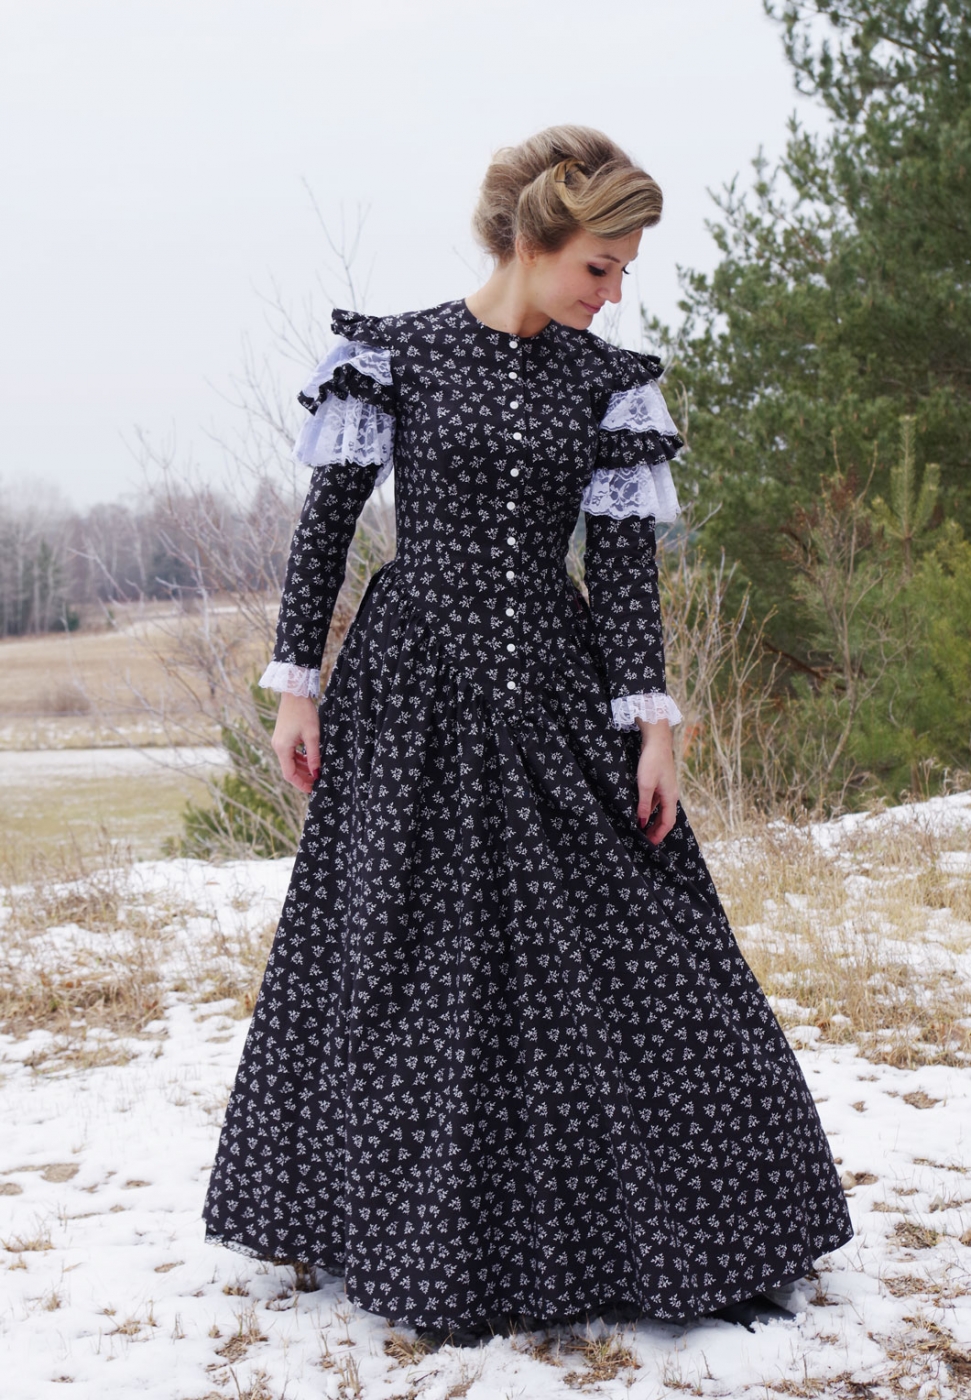 Ready to Ship Steampunk Victorian Dress, Bustle Skirt, Cotton